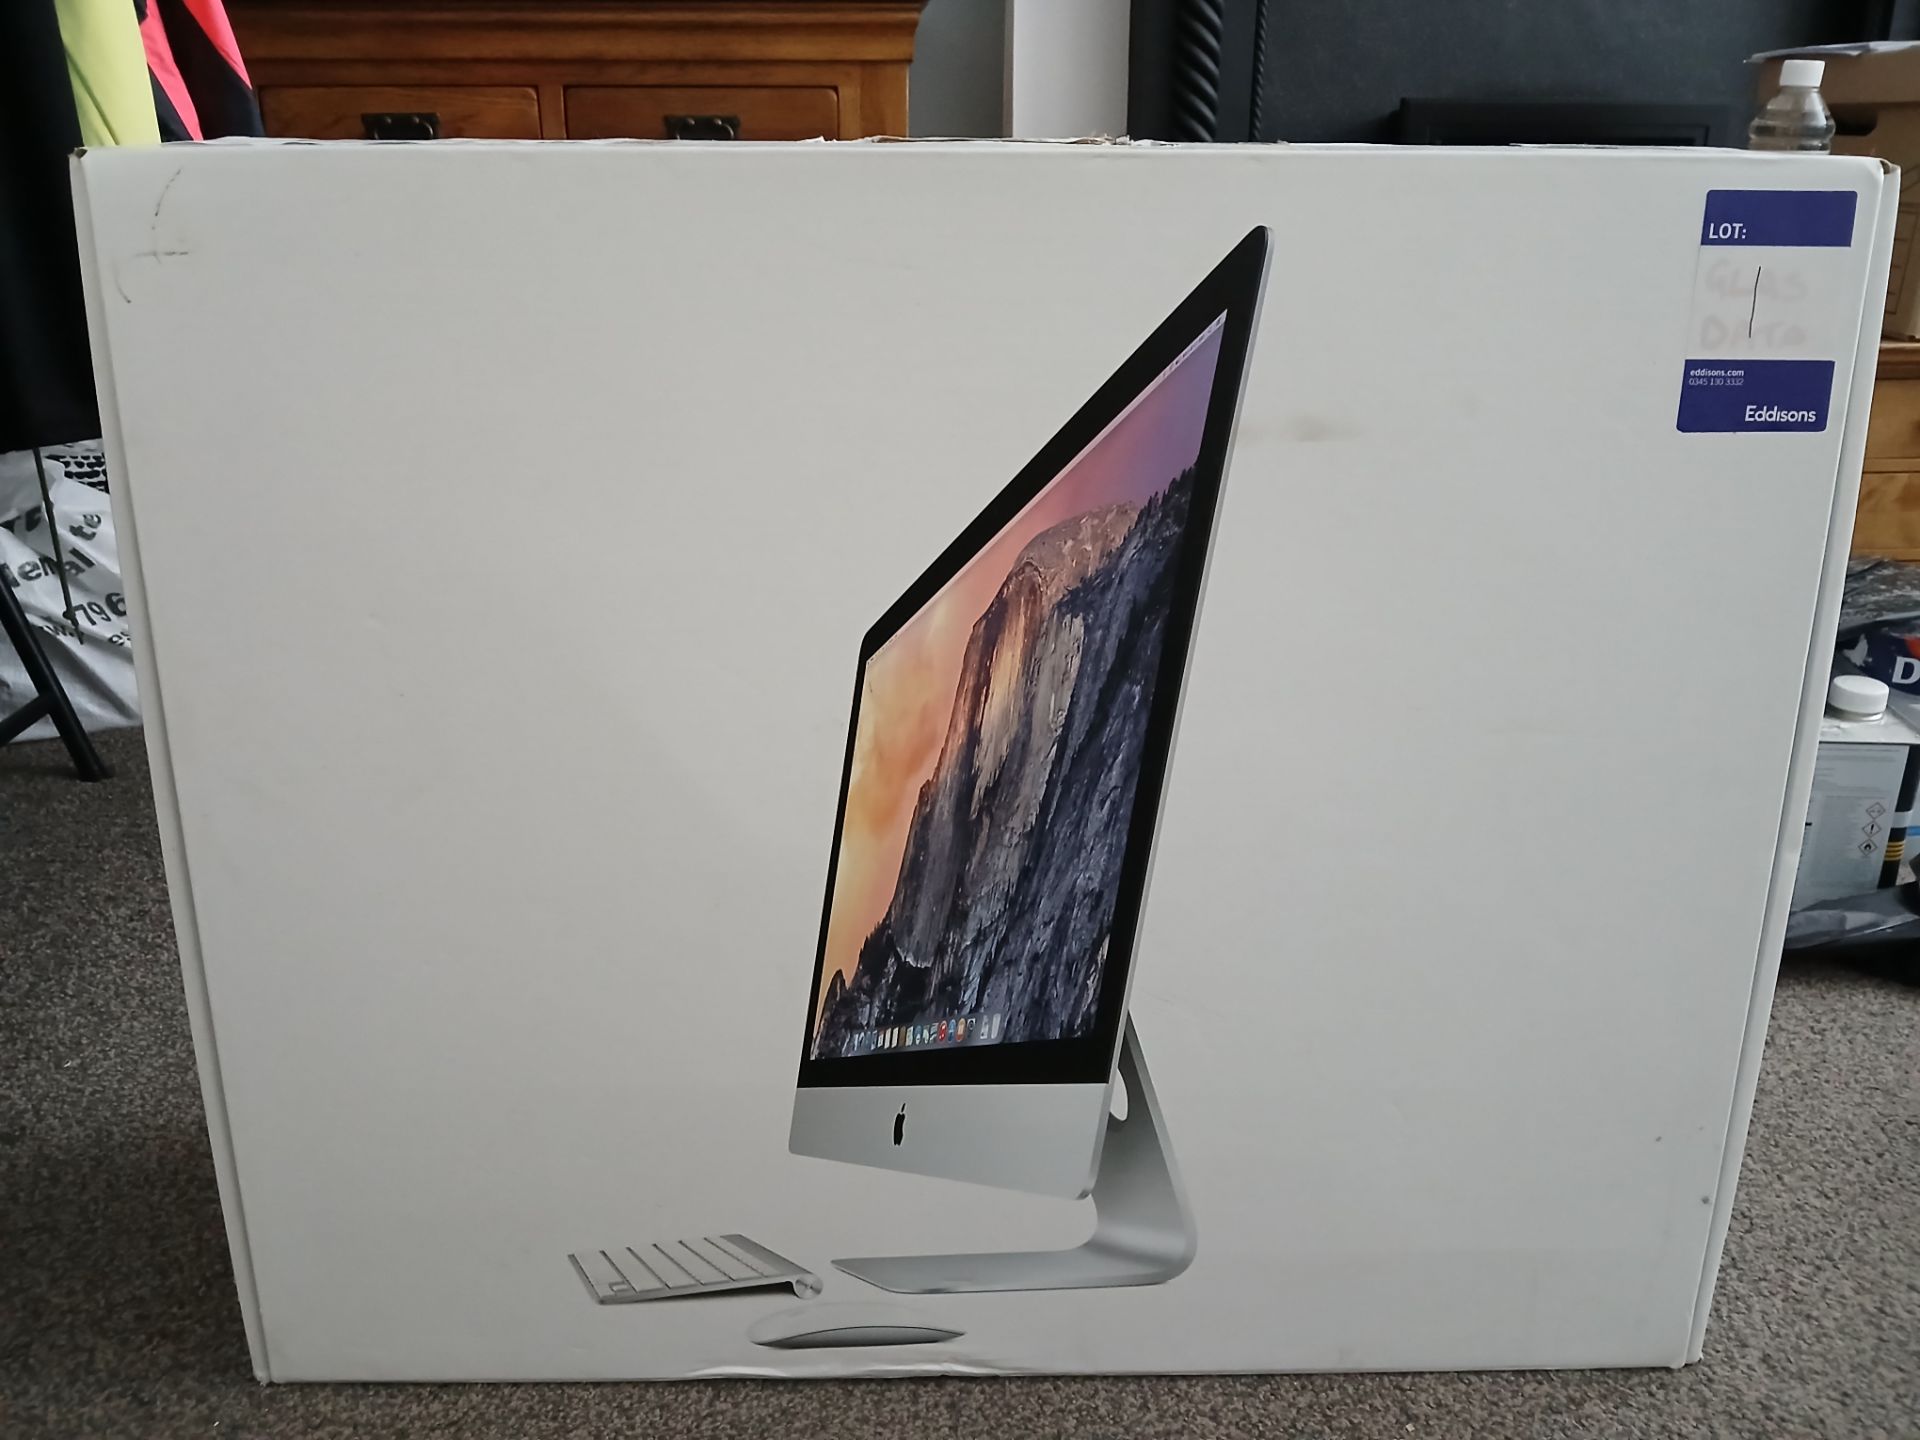 Apple iMac (Retina 5K, 27”, 2019), Serial Number DGK2HE9JV3Y (iMac only, no mouse, keyboard, or